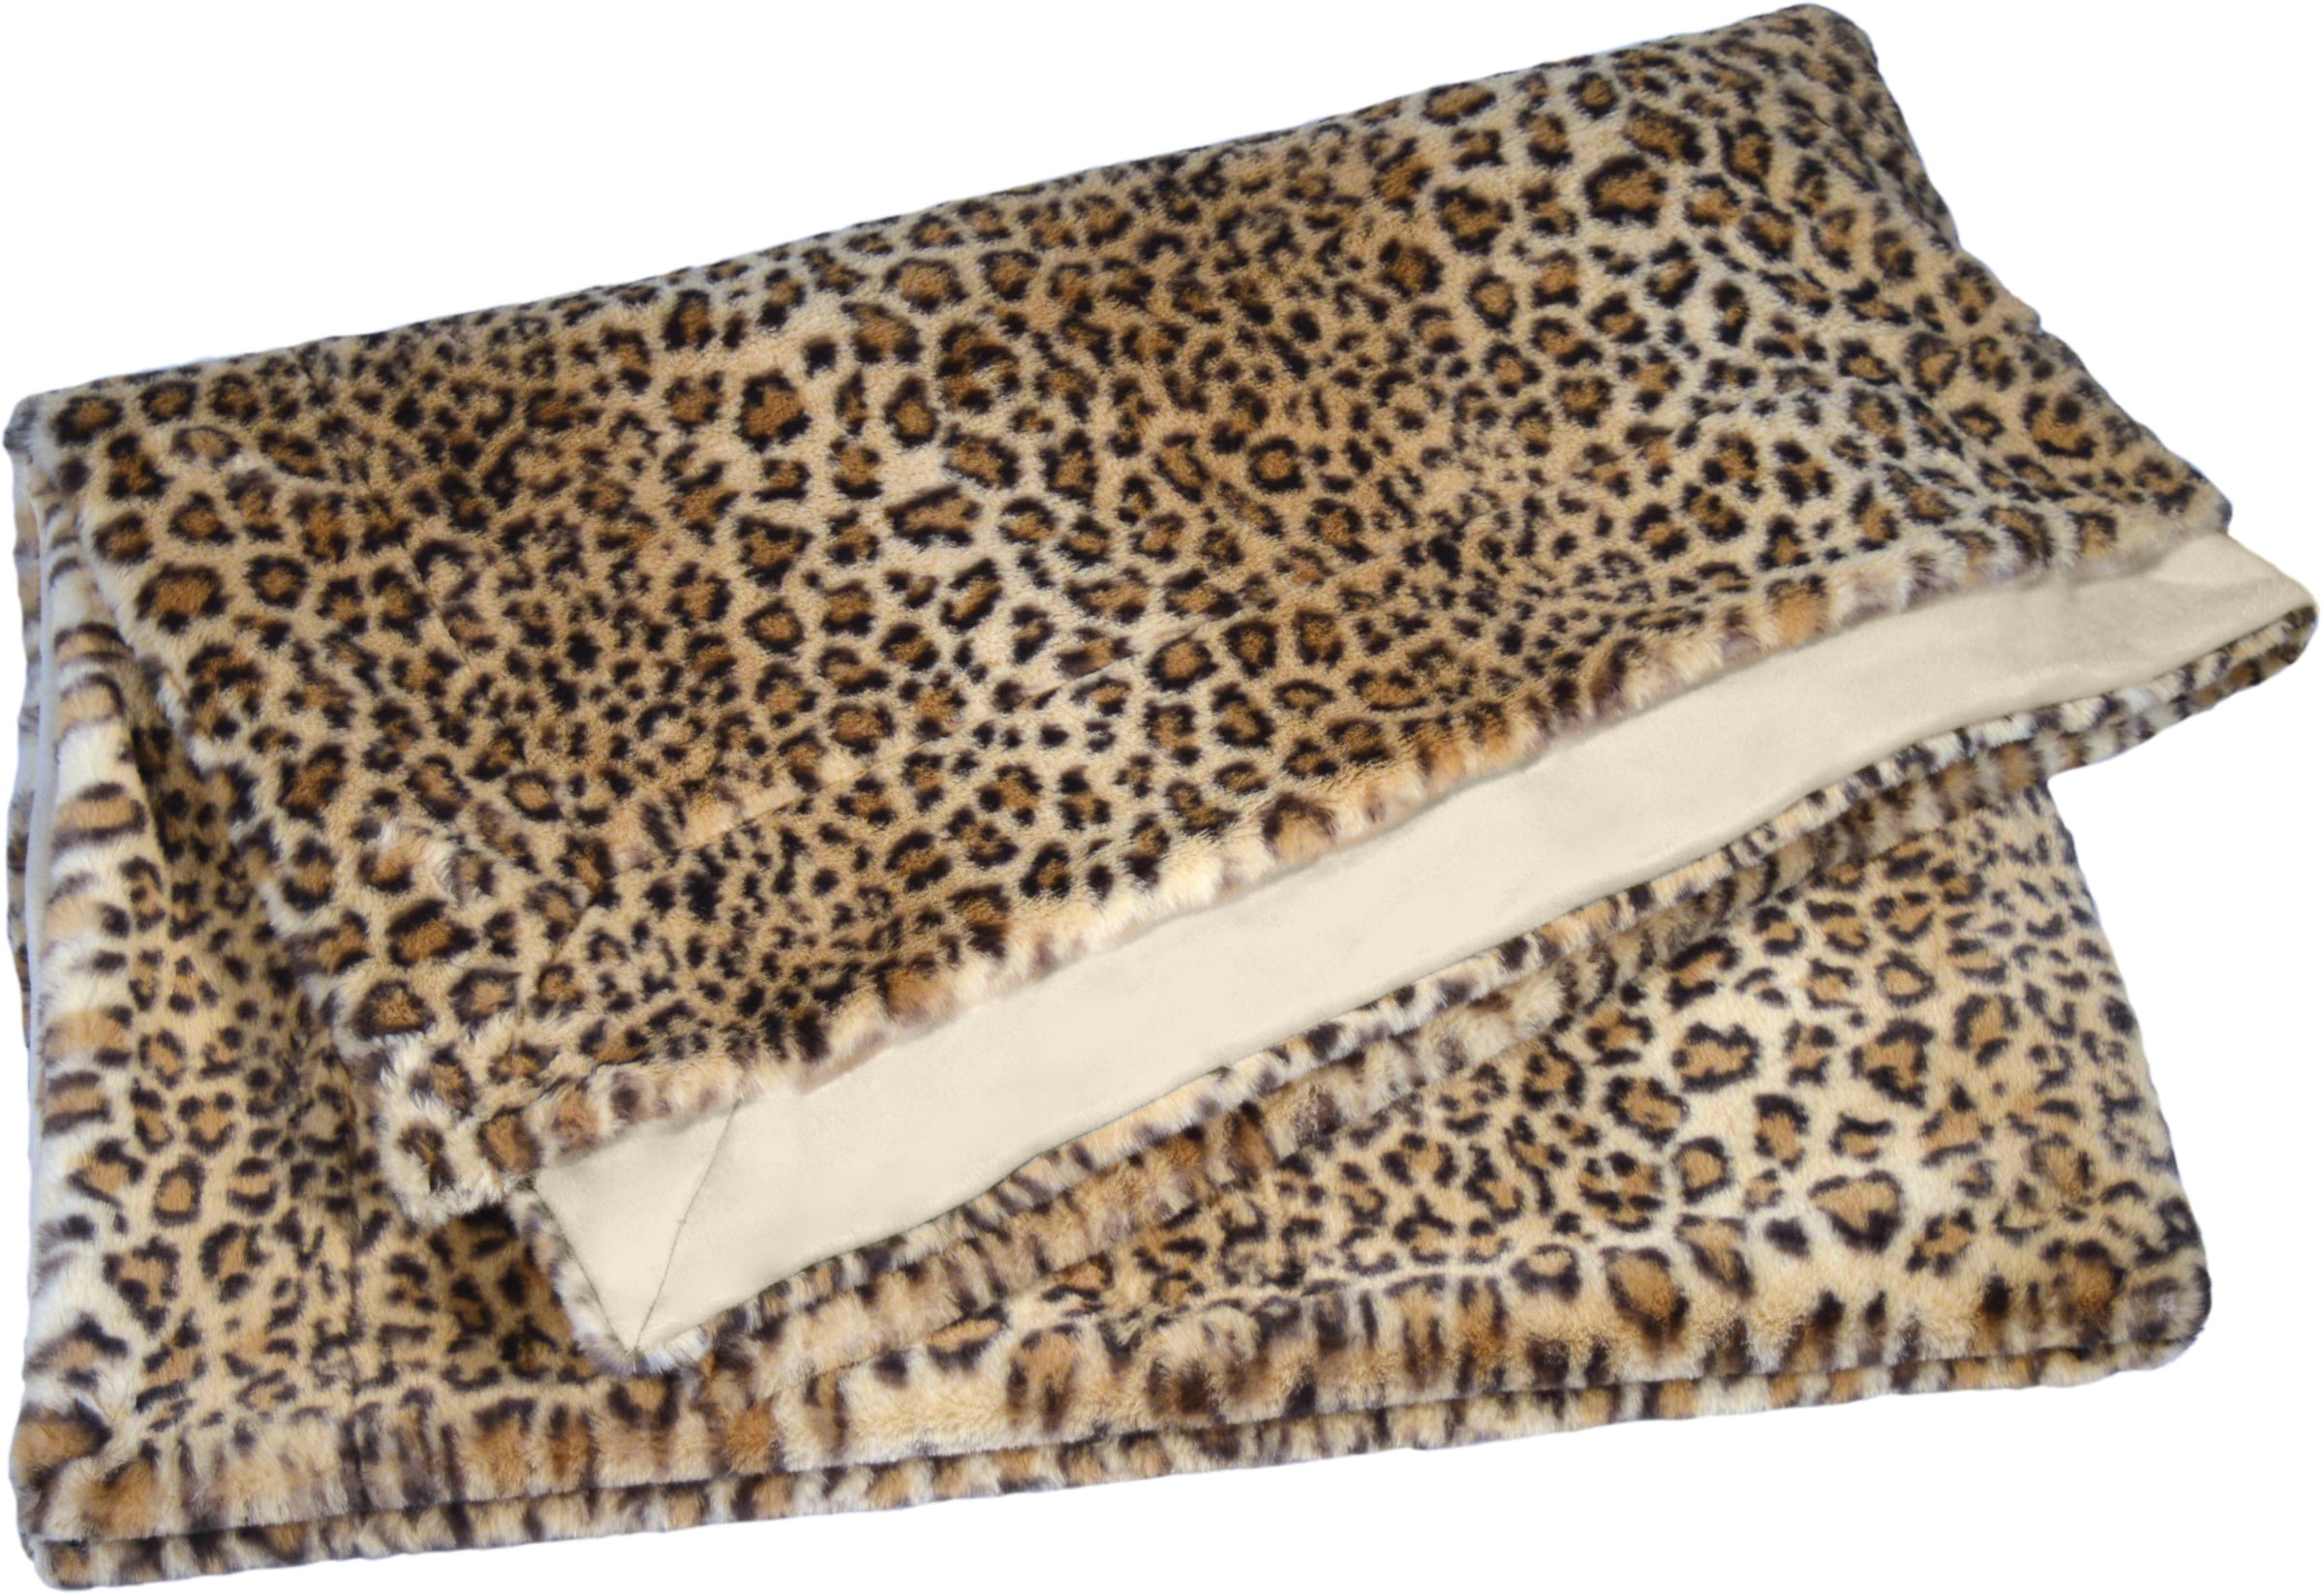 MESANA Wohndecke »Leopard«, aus hochwertigem Fellimitat